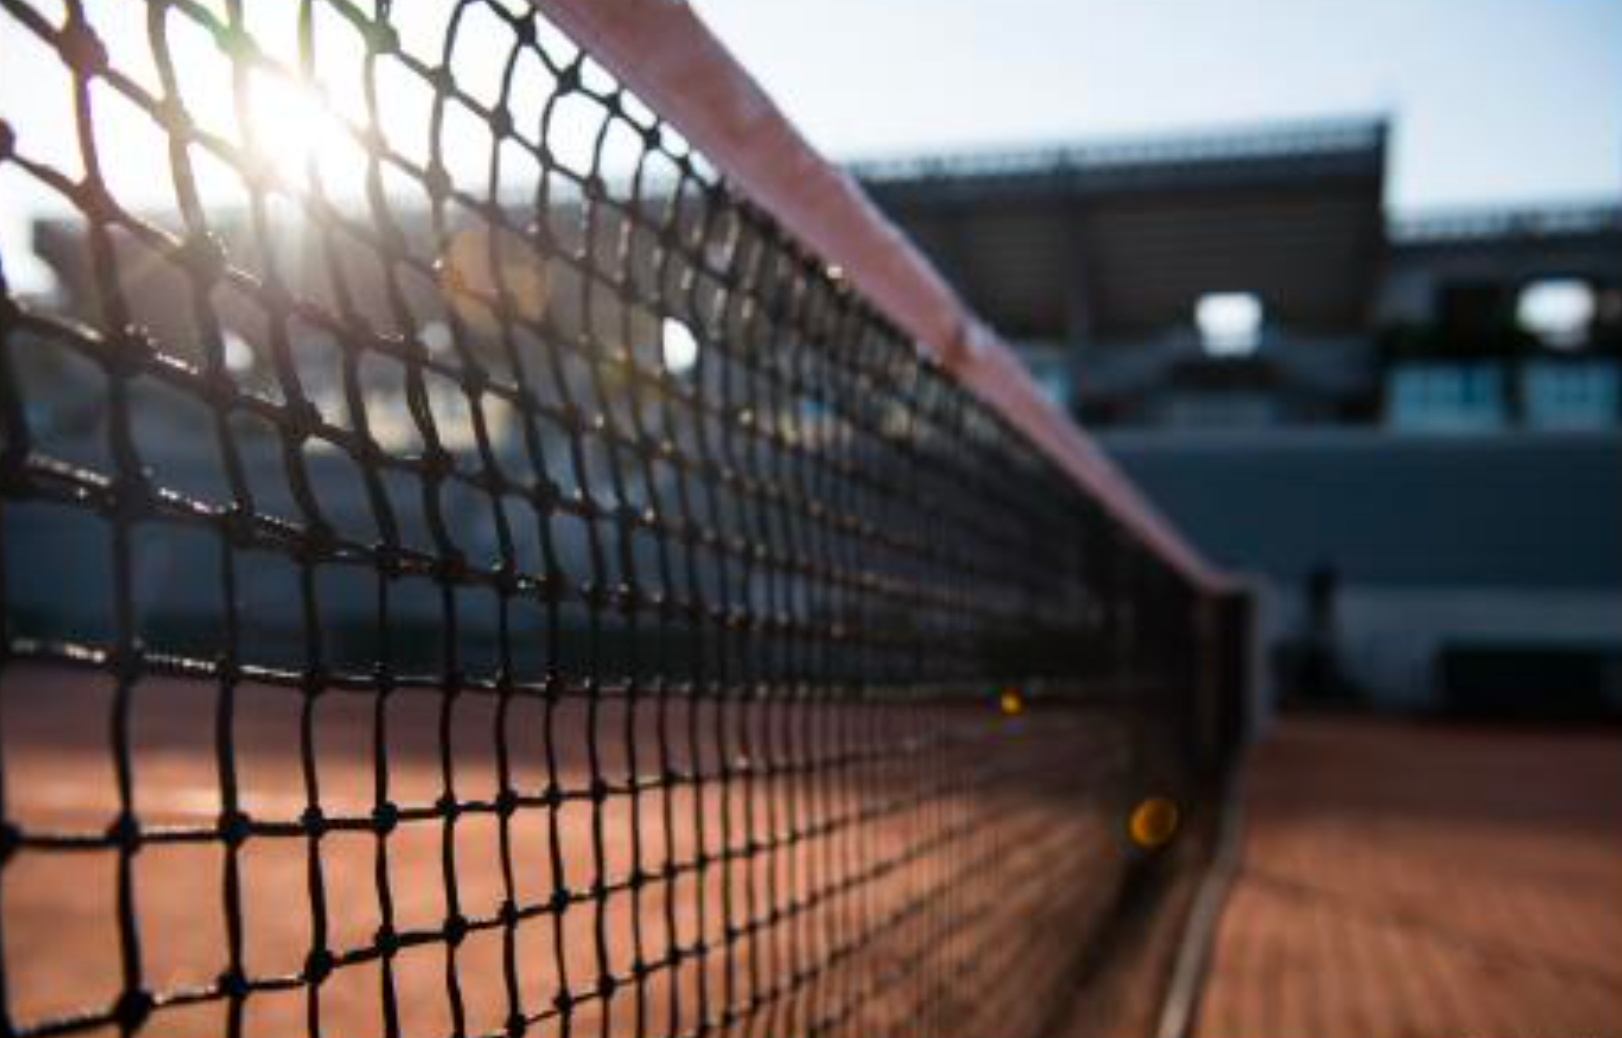 Tennis net on clay court